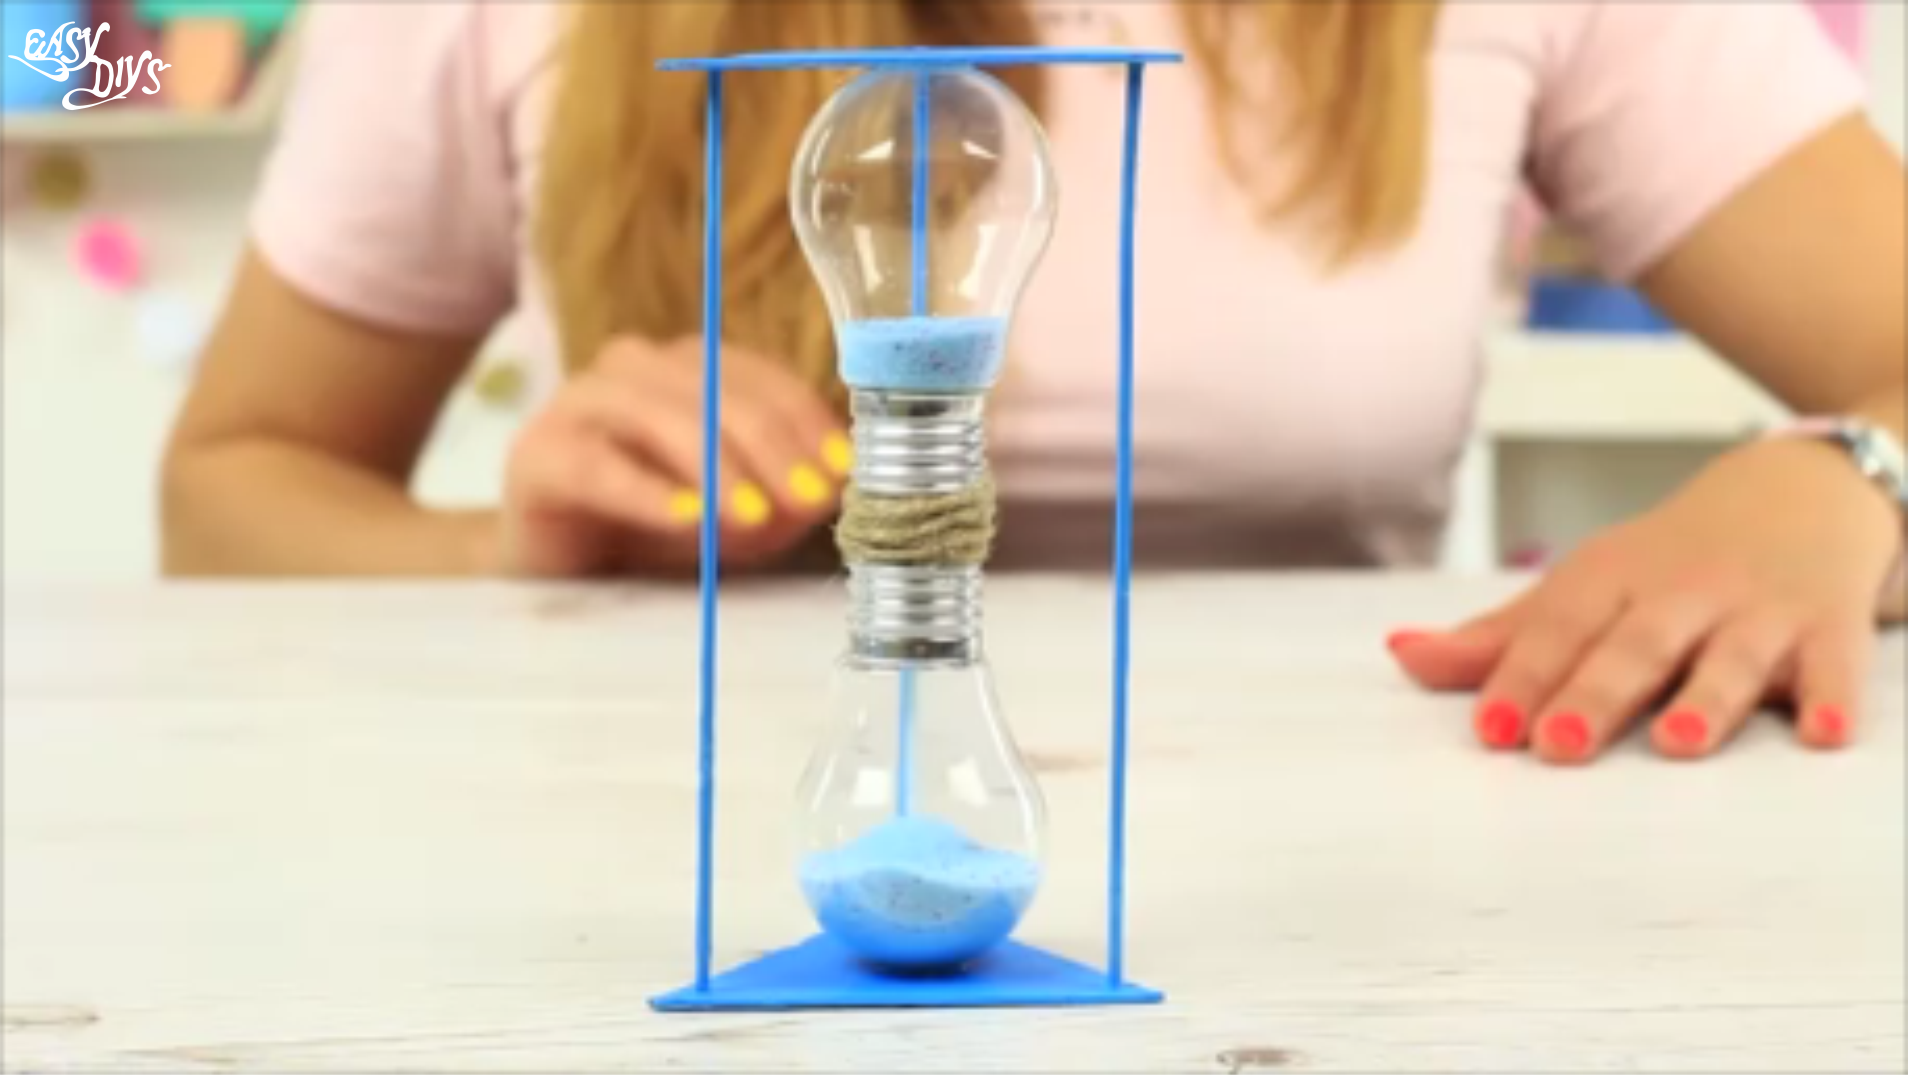 DIY Hourglass Clock Out of Light Bulbs